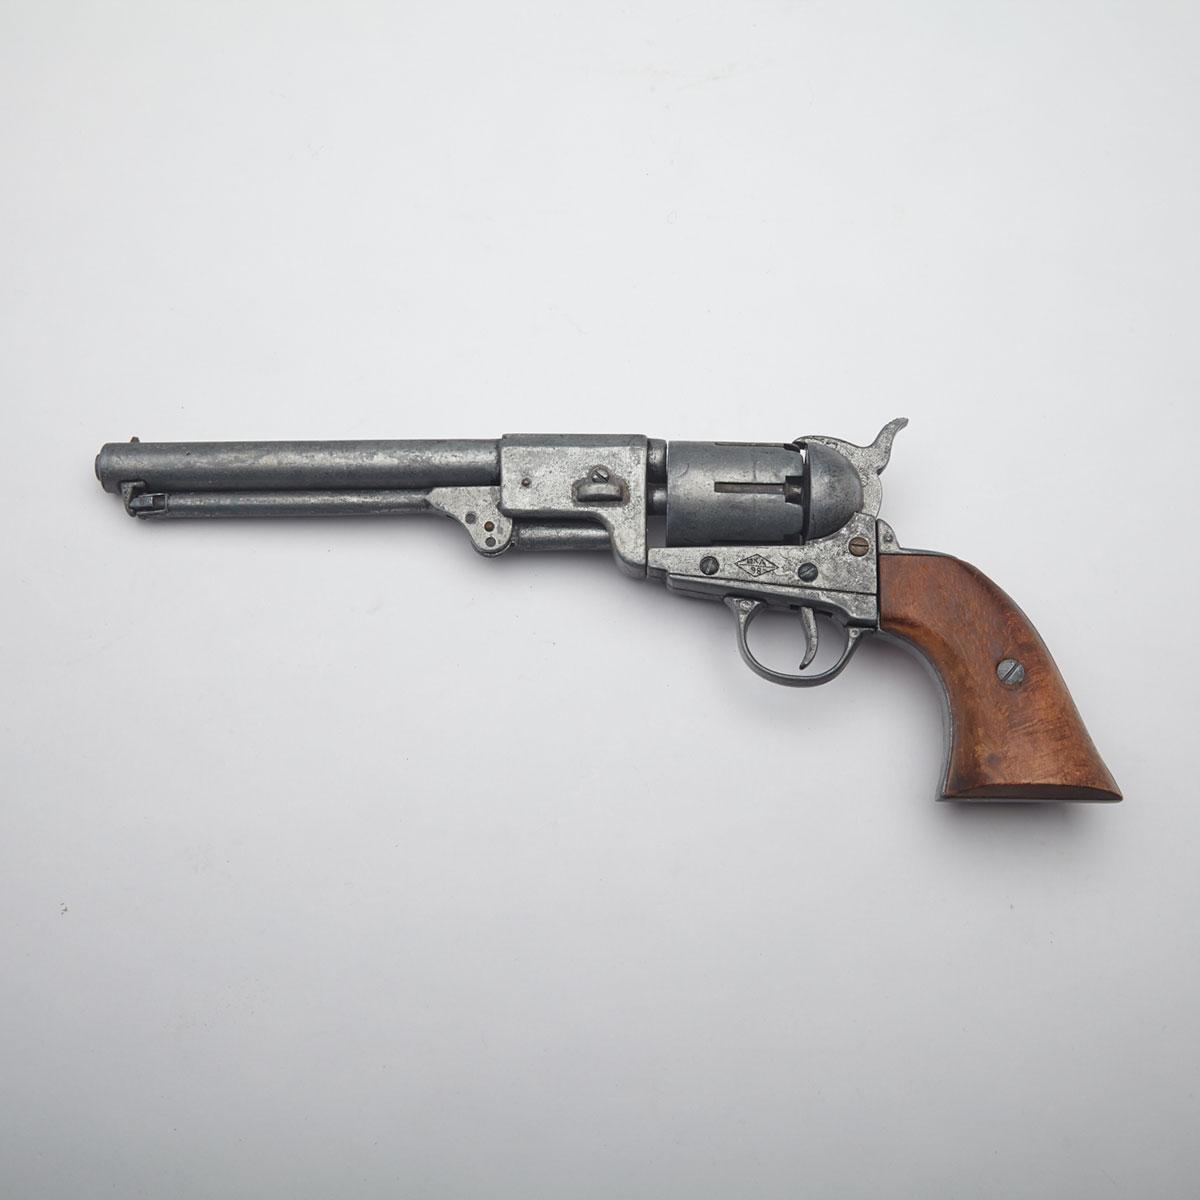 Spanish Replica of a Colt Model 1851 Navy Revolver by Denix, mid 20th century